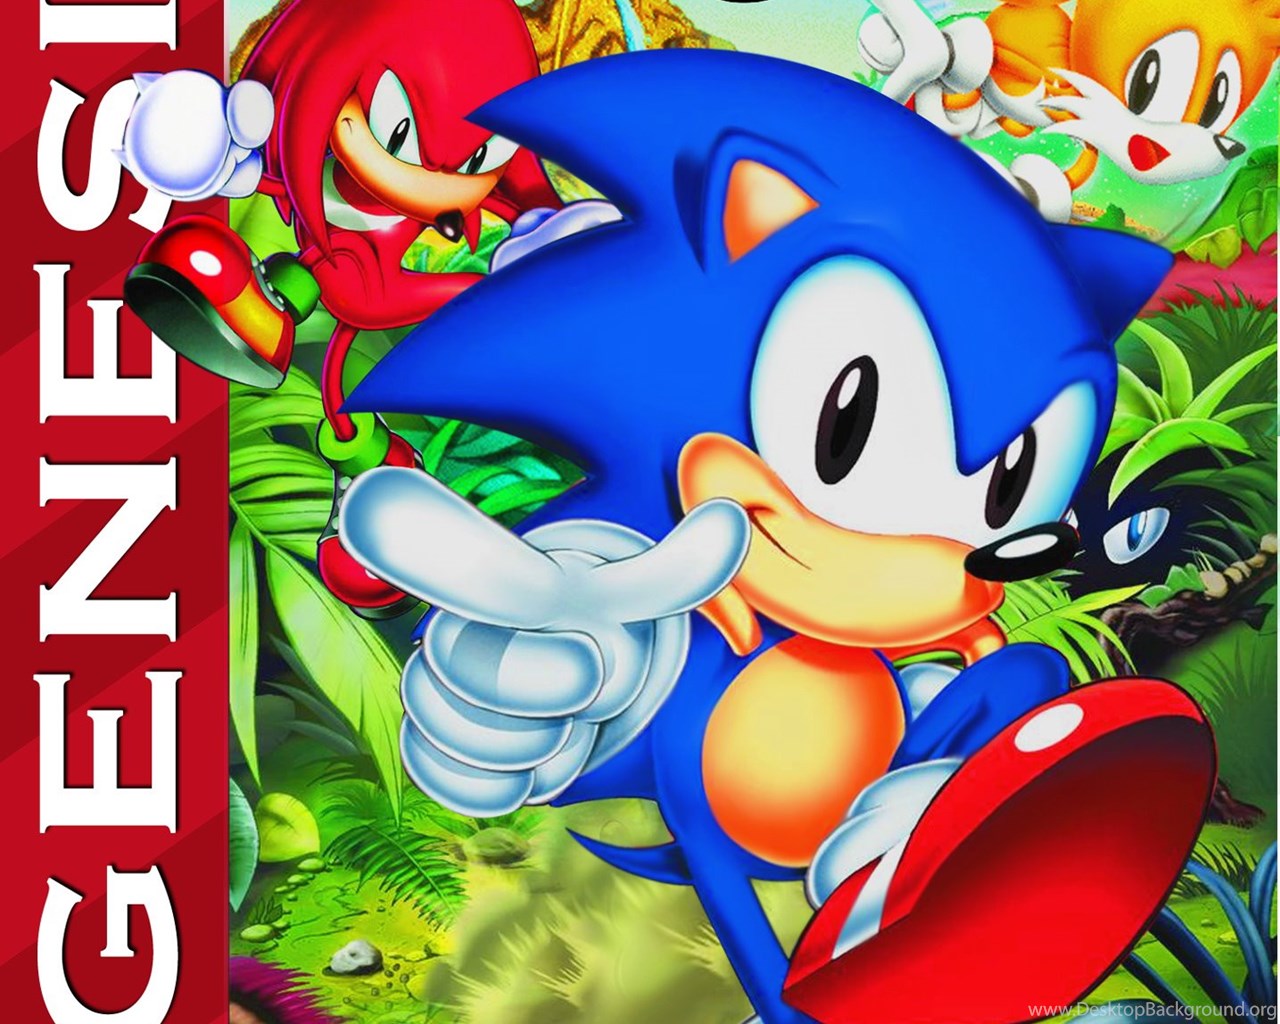 Play sonic 3. Игра Sonic the Hedgehog 3. Sonic the Hedgehog 3 НАКЛЗ. Sonic & Knuckles (Соник & НАКЛЗ), 1994. Sonic 3 and Knuckles.